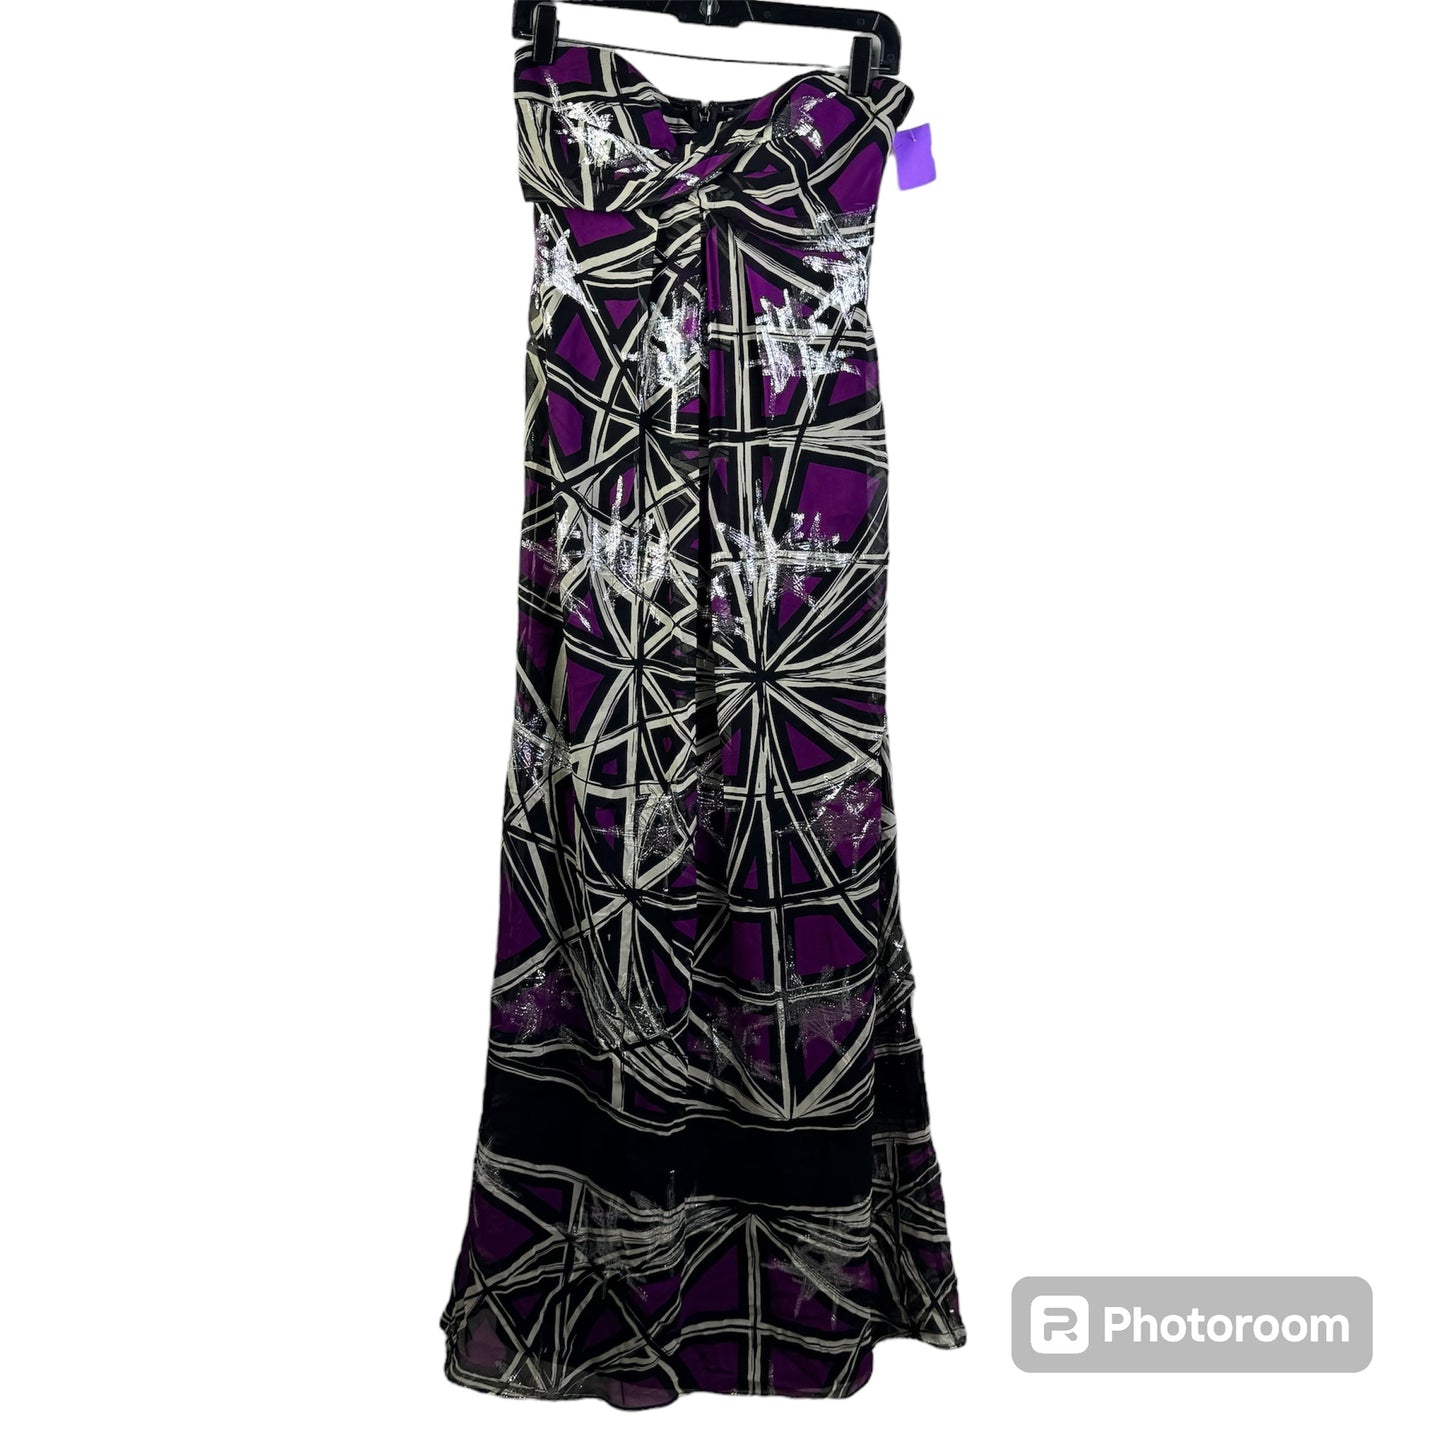 Purple & Silver Dress Party Long Nicole Miller, Size S